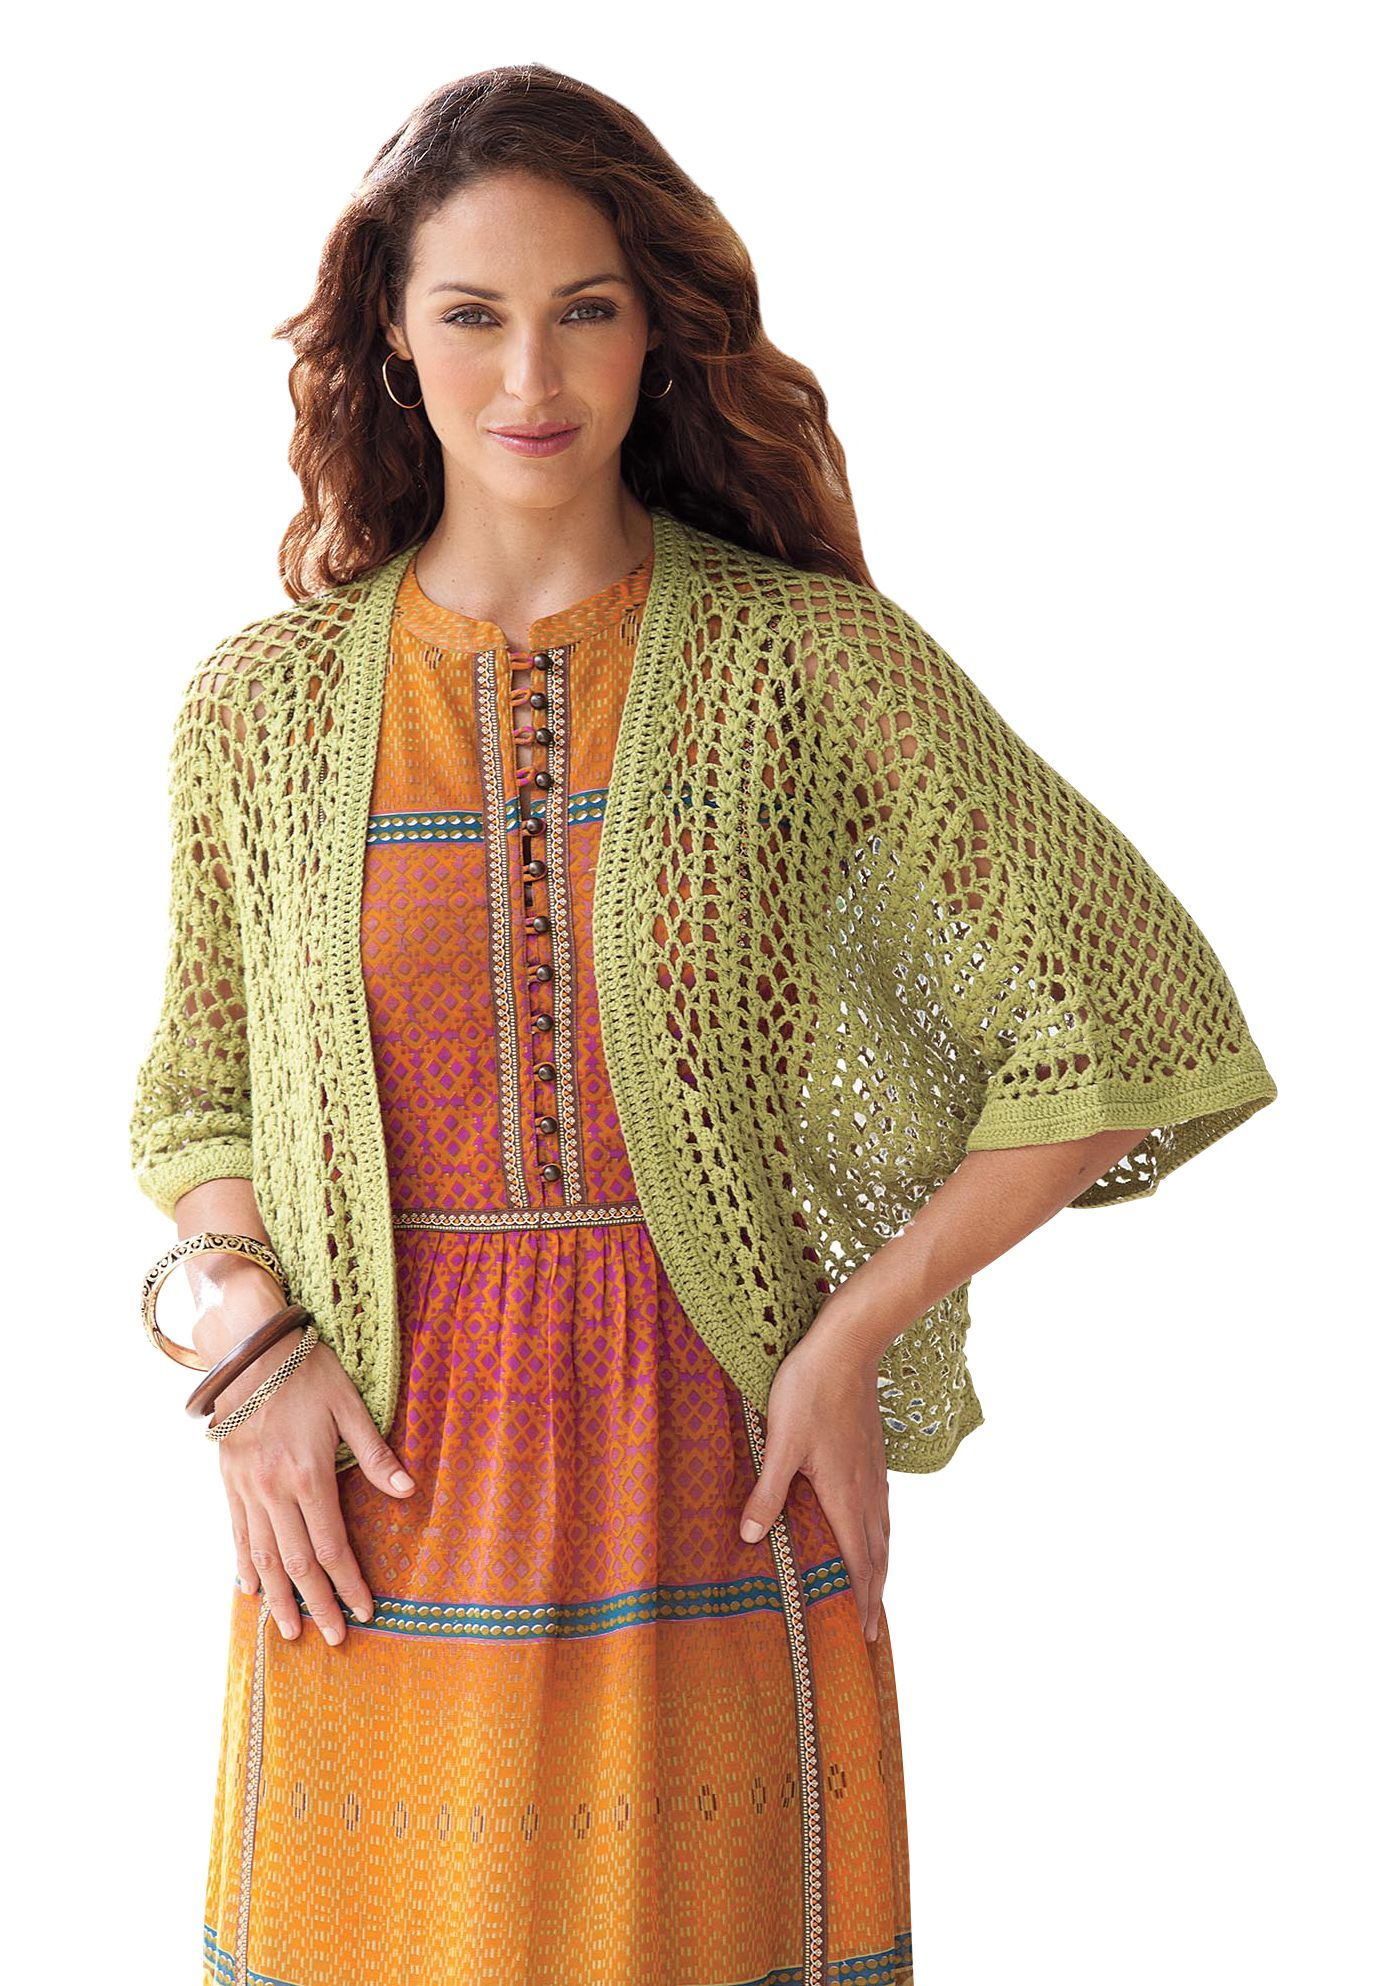 Crochet Shrug Plus Size Pattern Cotton Crochet Shrug Plus Size Shrugs Jessica London Stitched